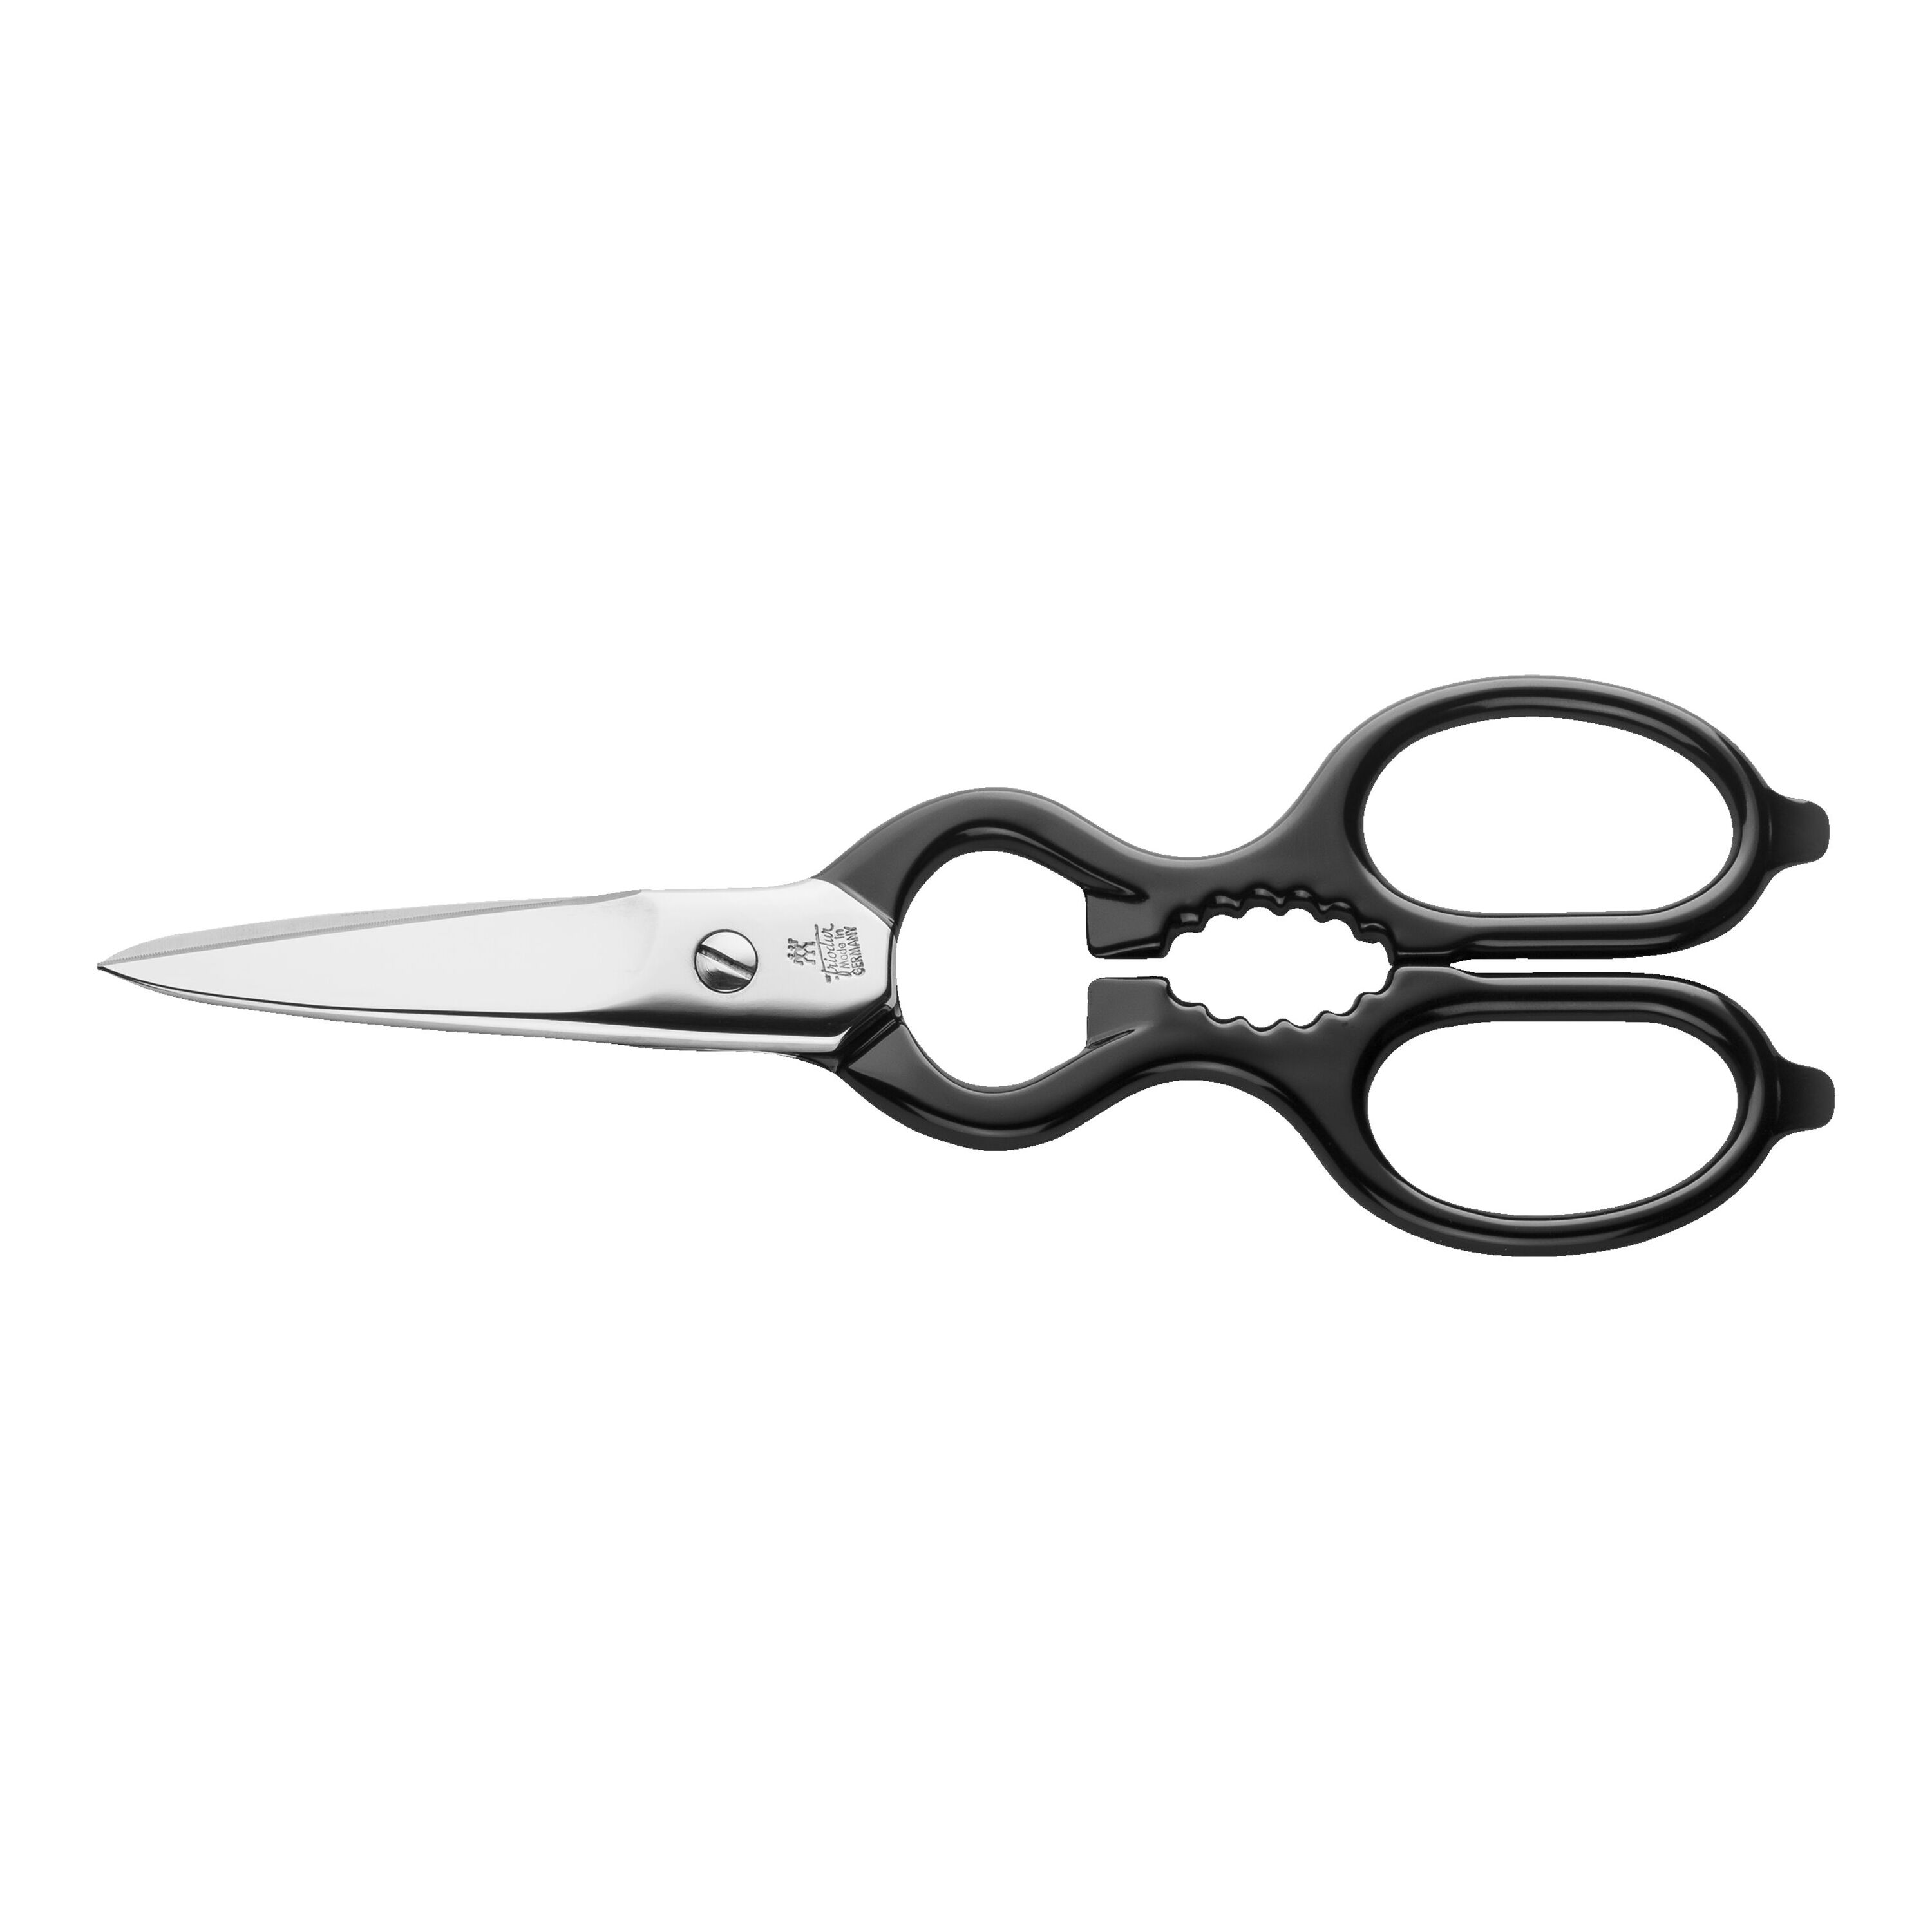 5 blade Herb Scissors - The BBQ Allstars